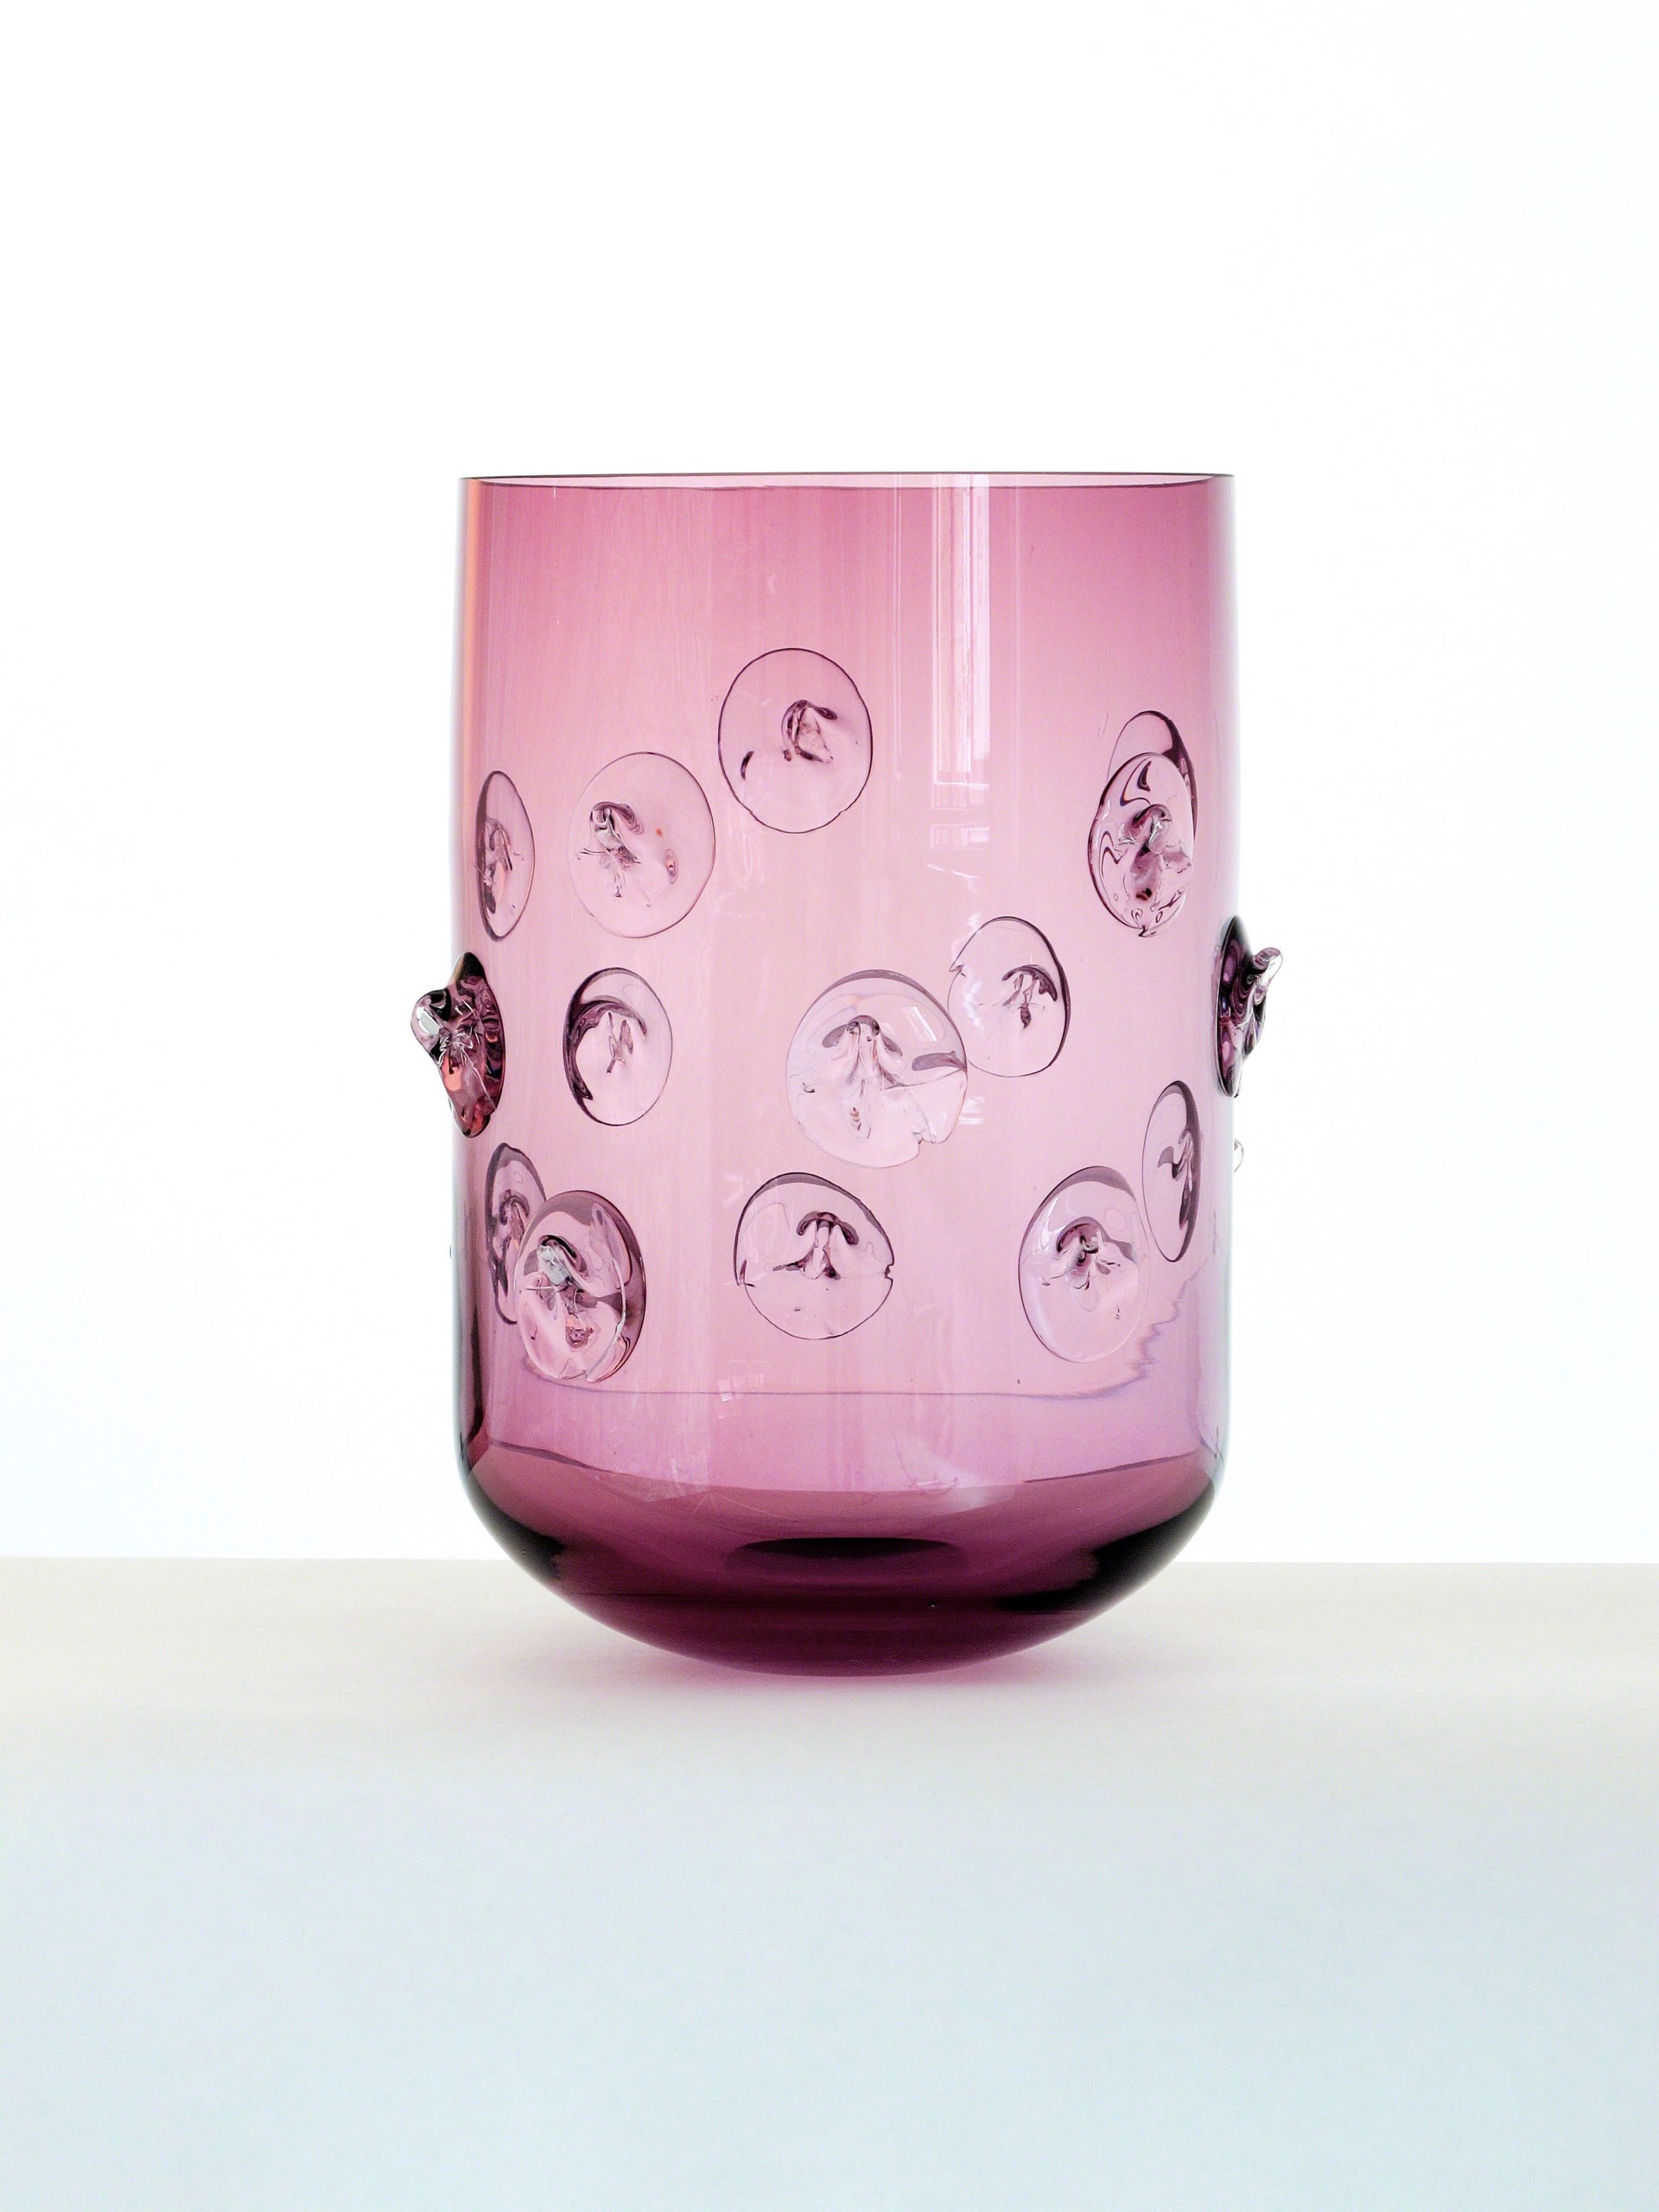 "Studs" Vase by Eric Schmitt